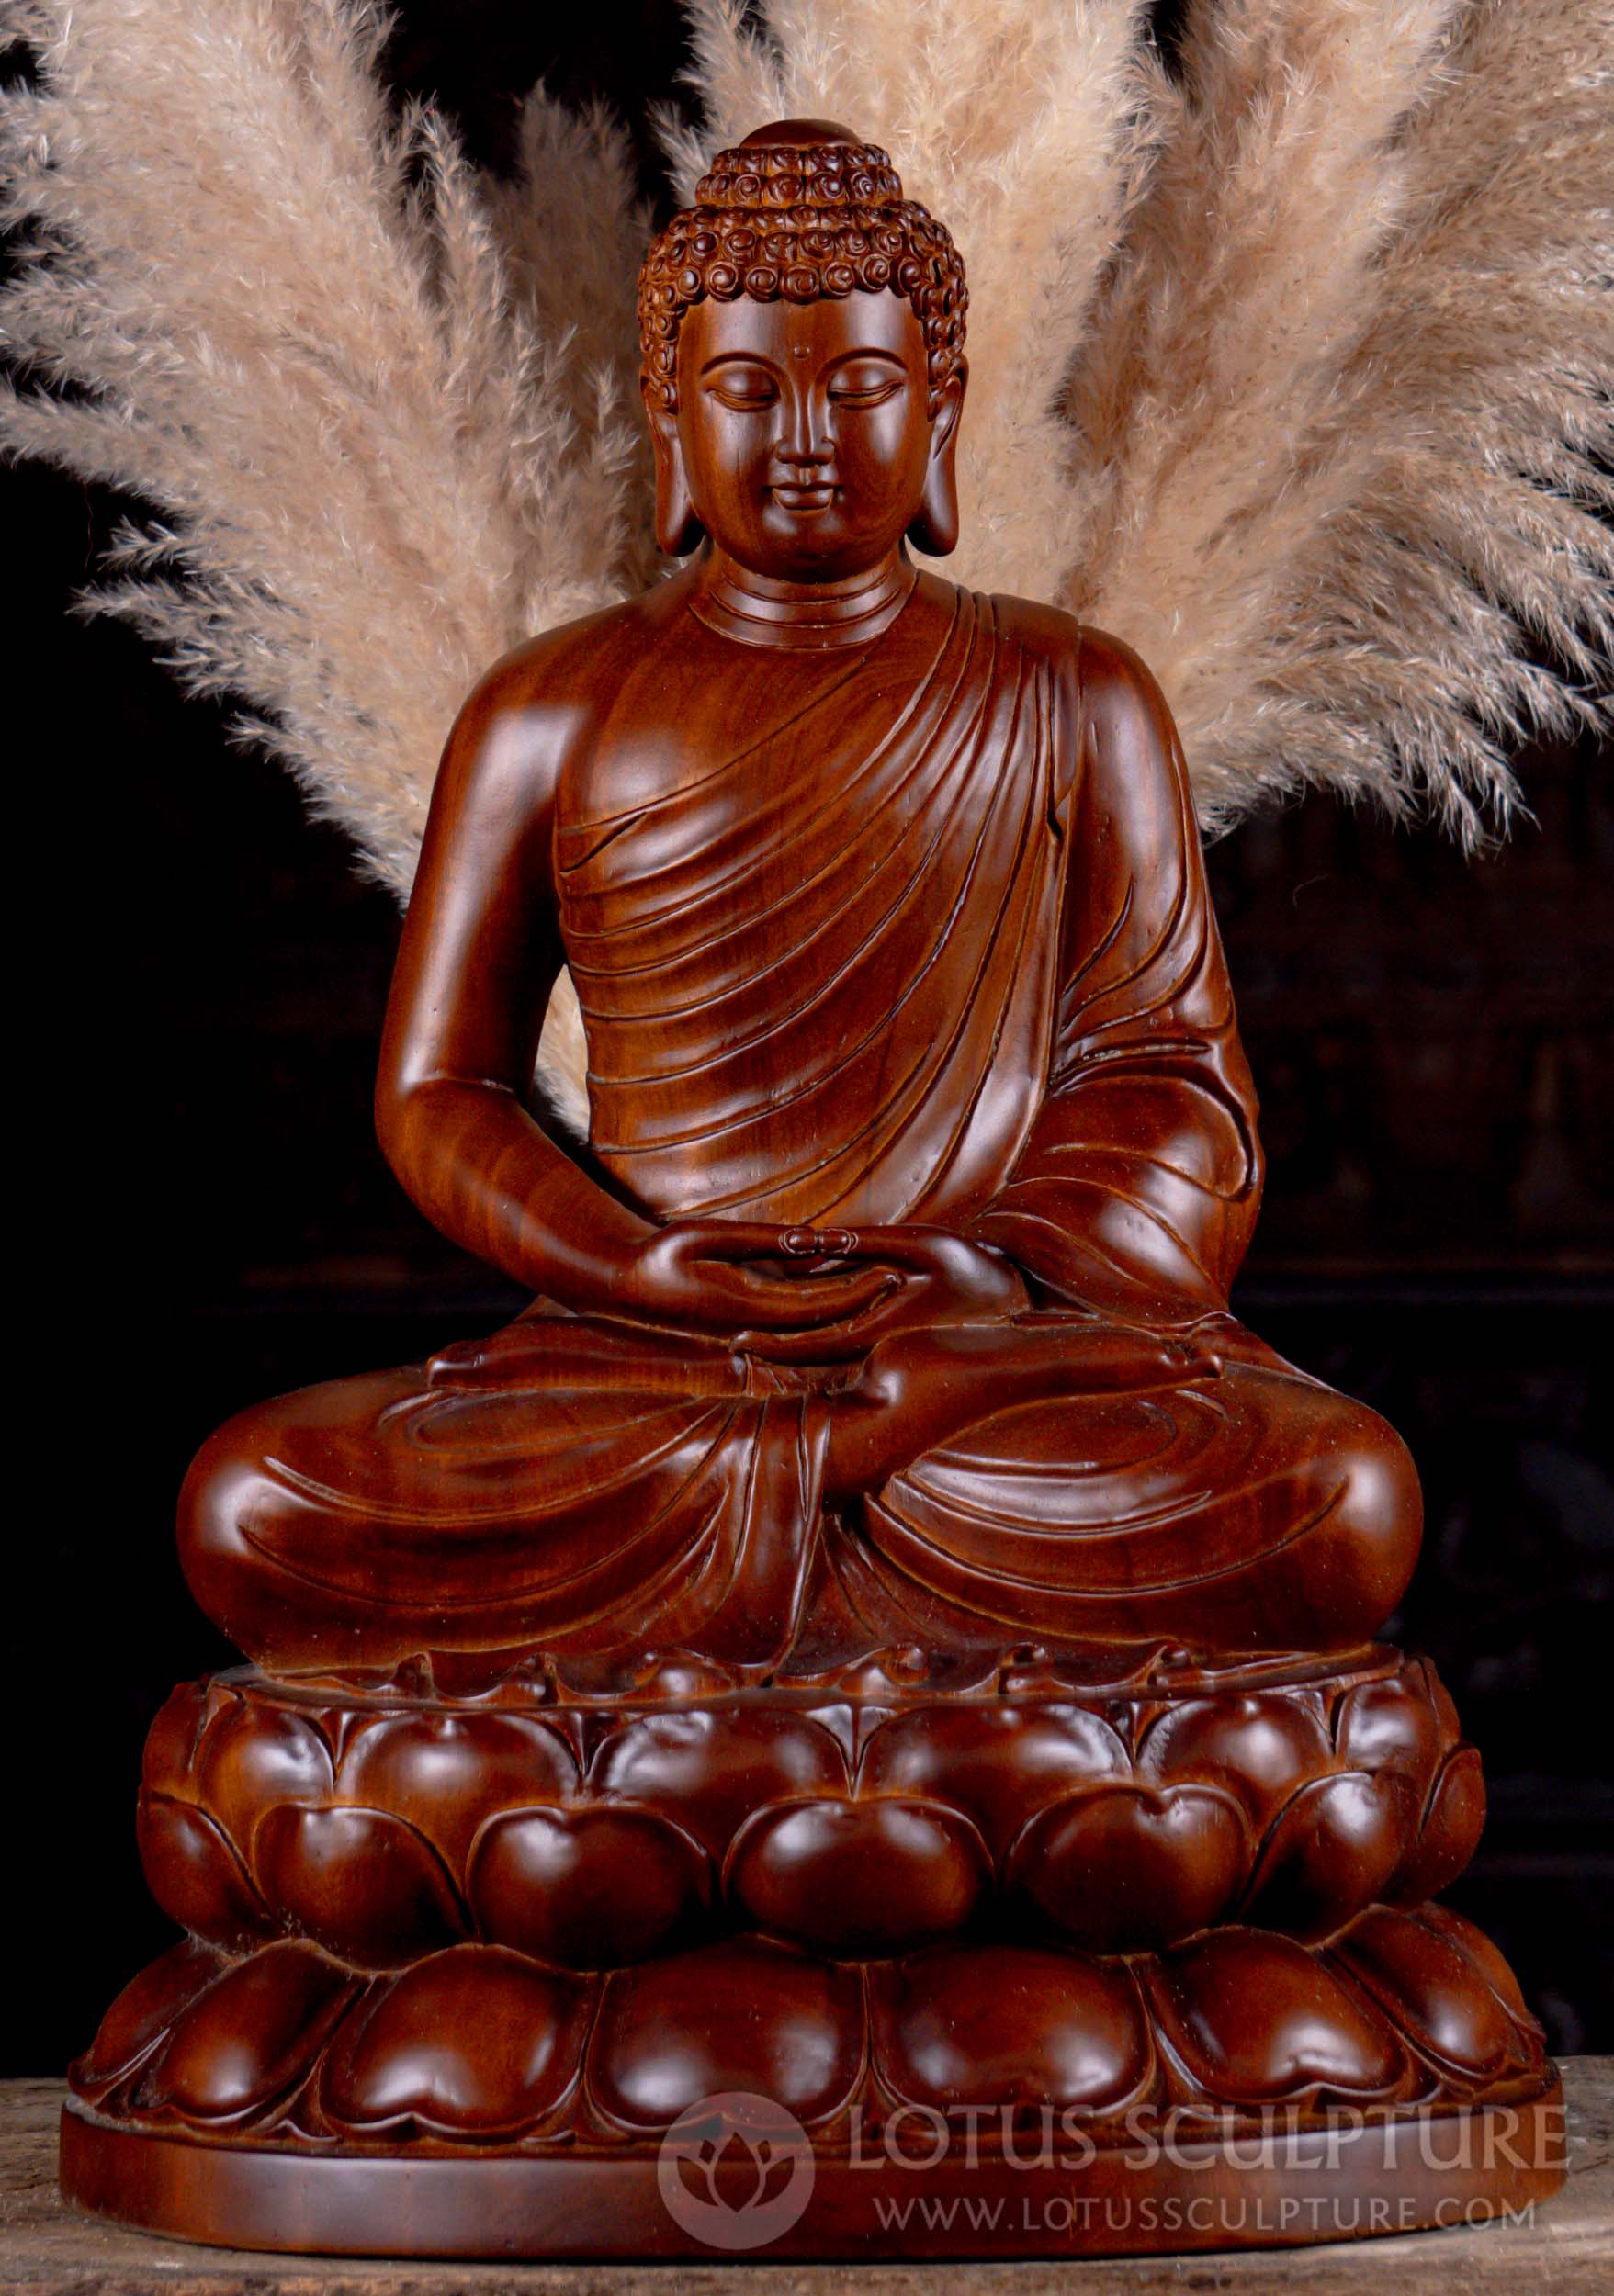 What meditative pose did Buddha use? - Quora